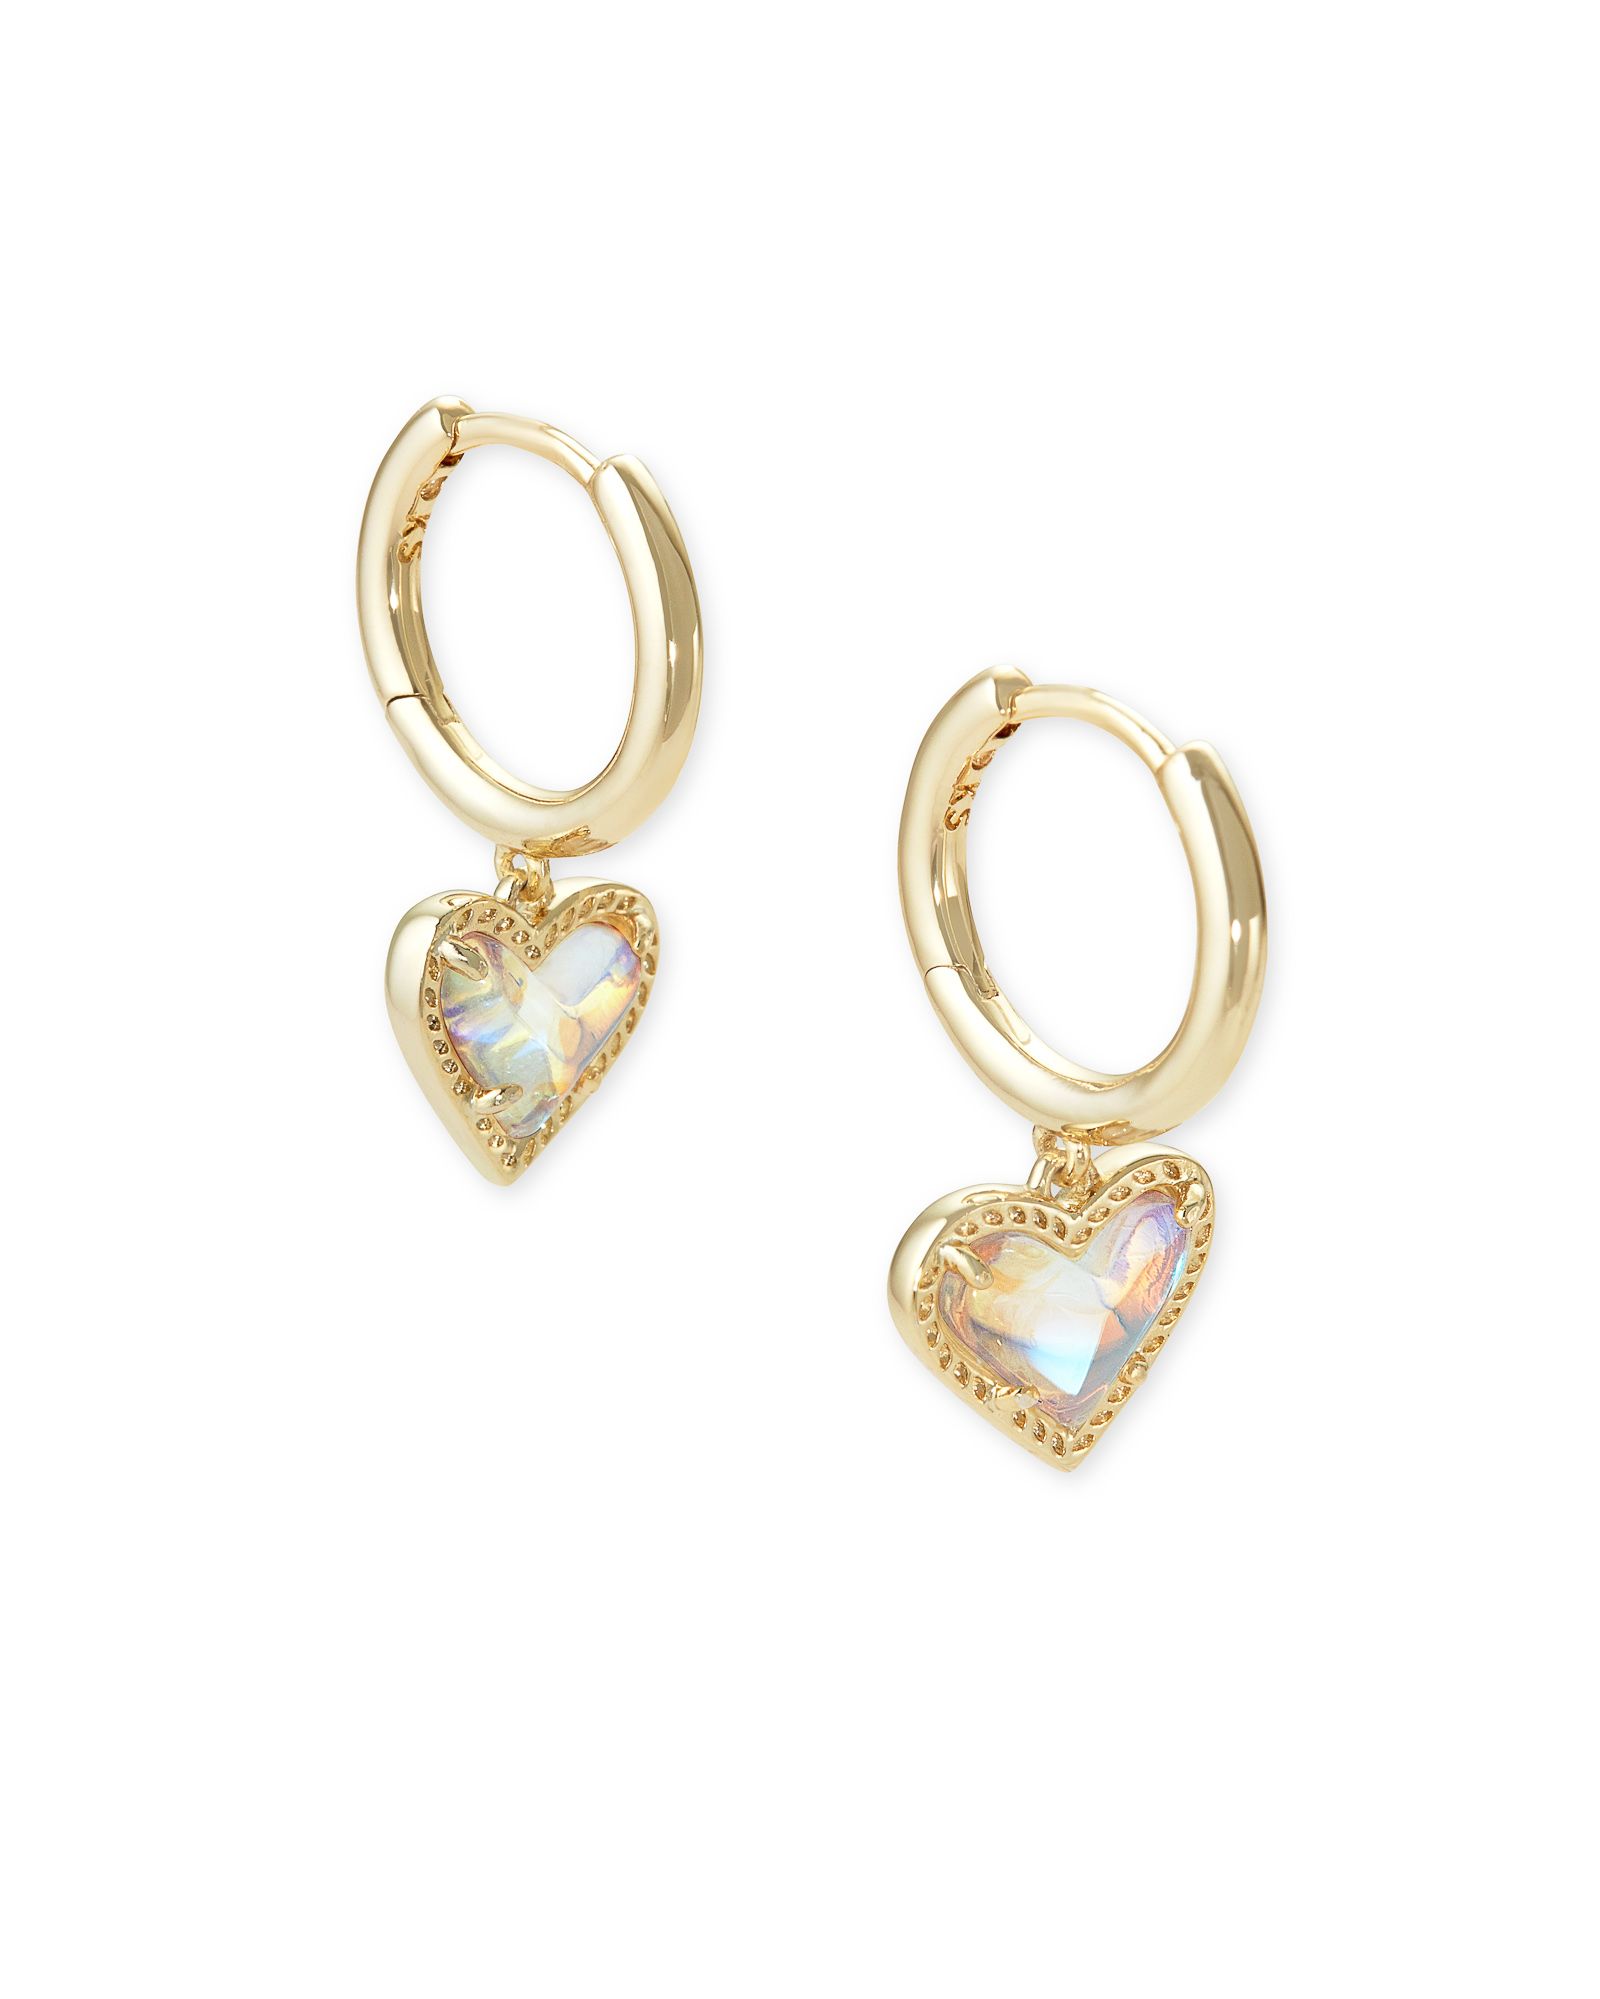 Ari Heart Gold Huggie Earrings in Dichroic Glass | Kendra Scott | Kendra Scott